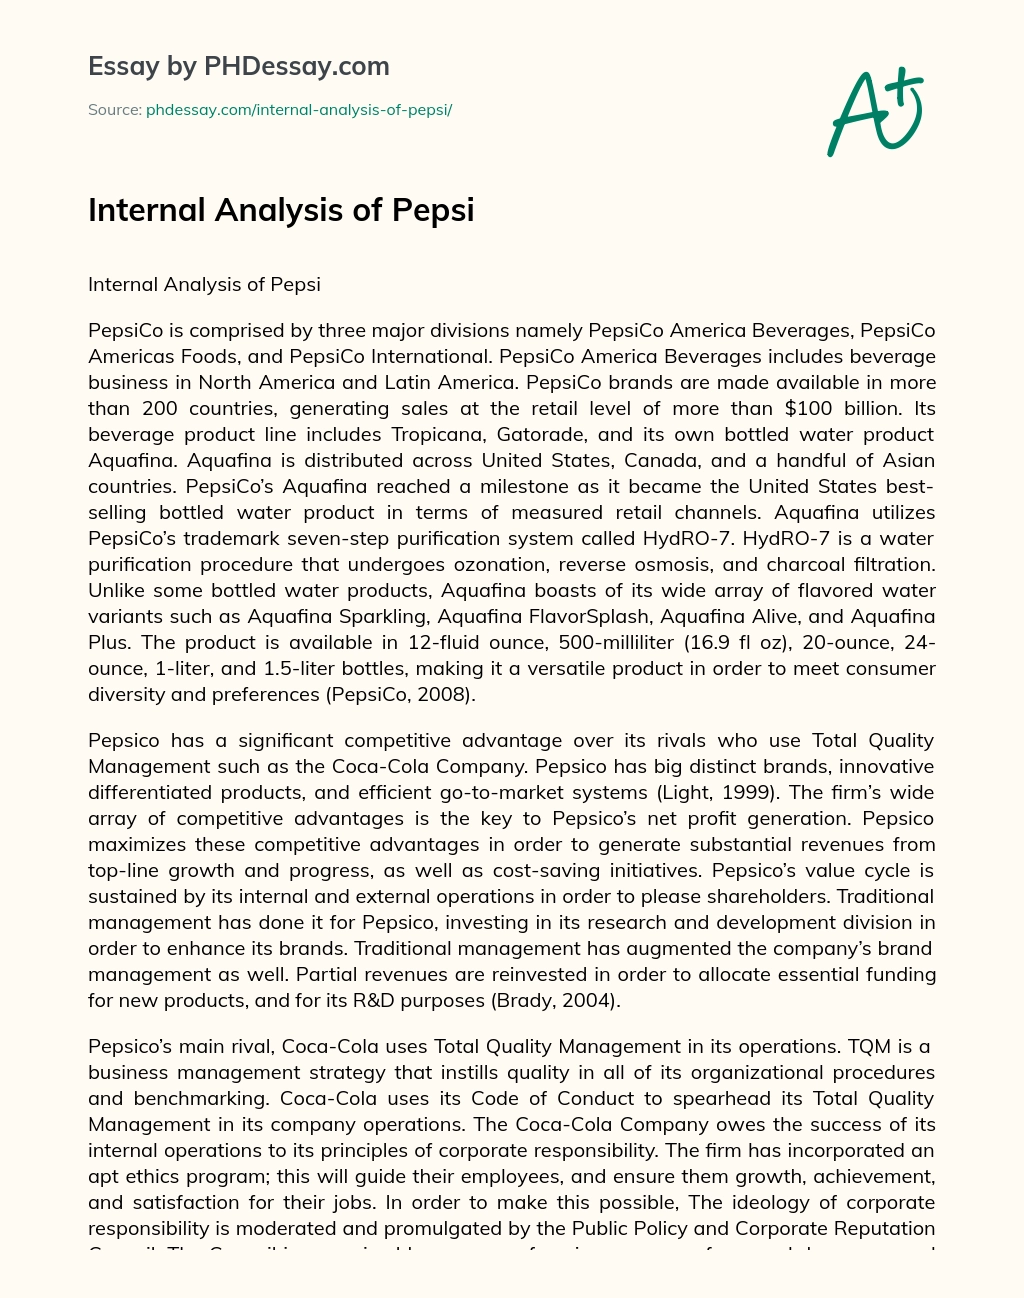 Internal Analysis of Pepsi essay